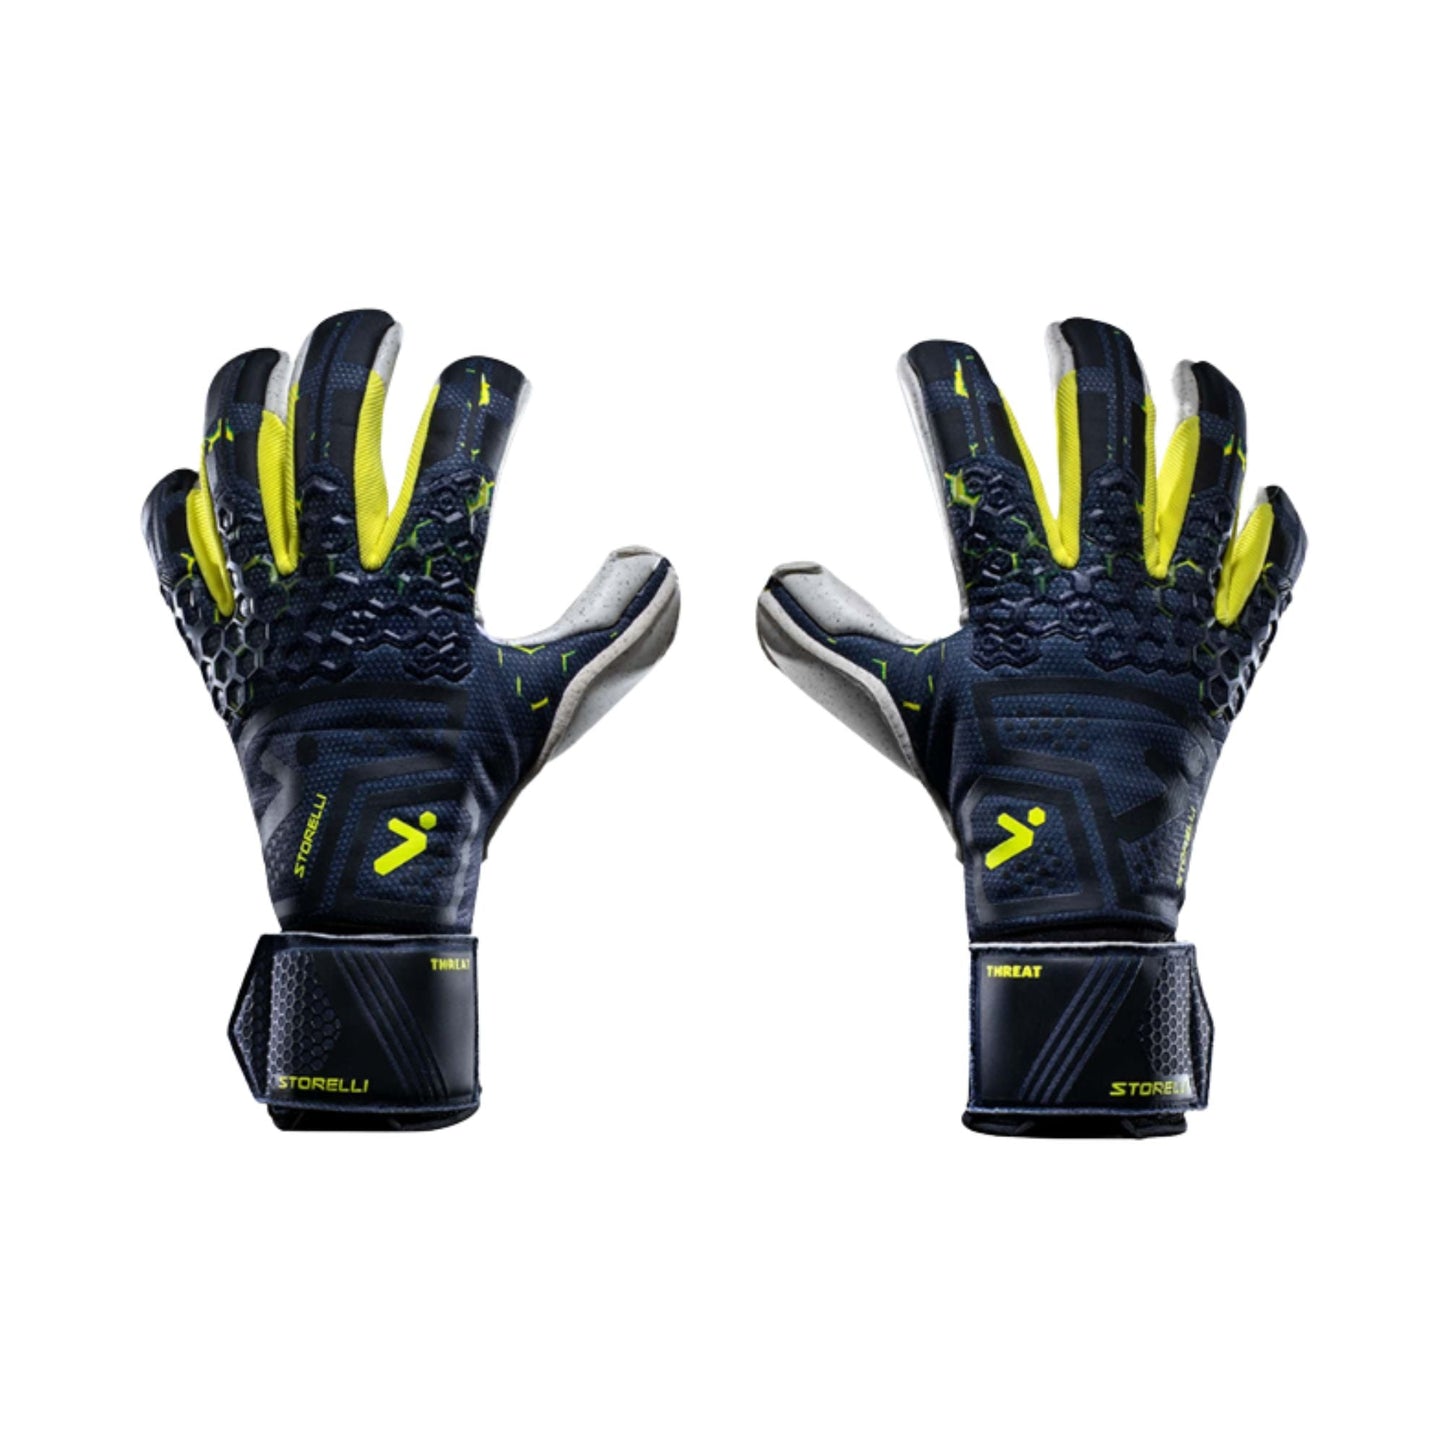 Goalkeeper Gloves - Silencer Threat by Storelli Goalkeeper gloves ITASPORT 